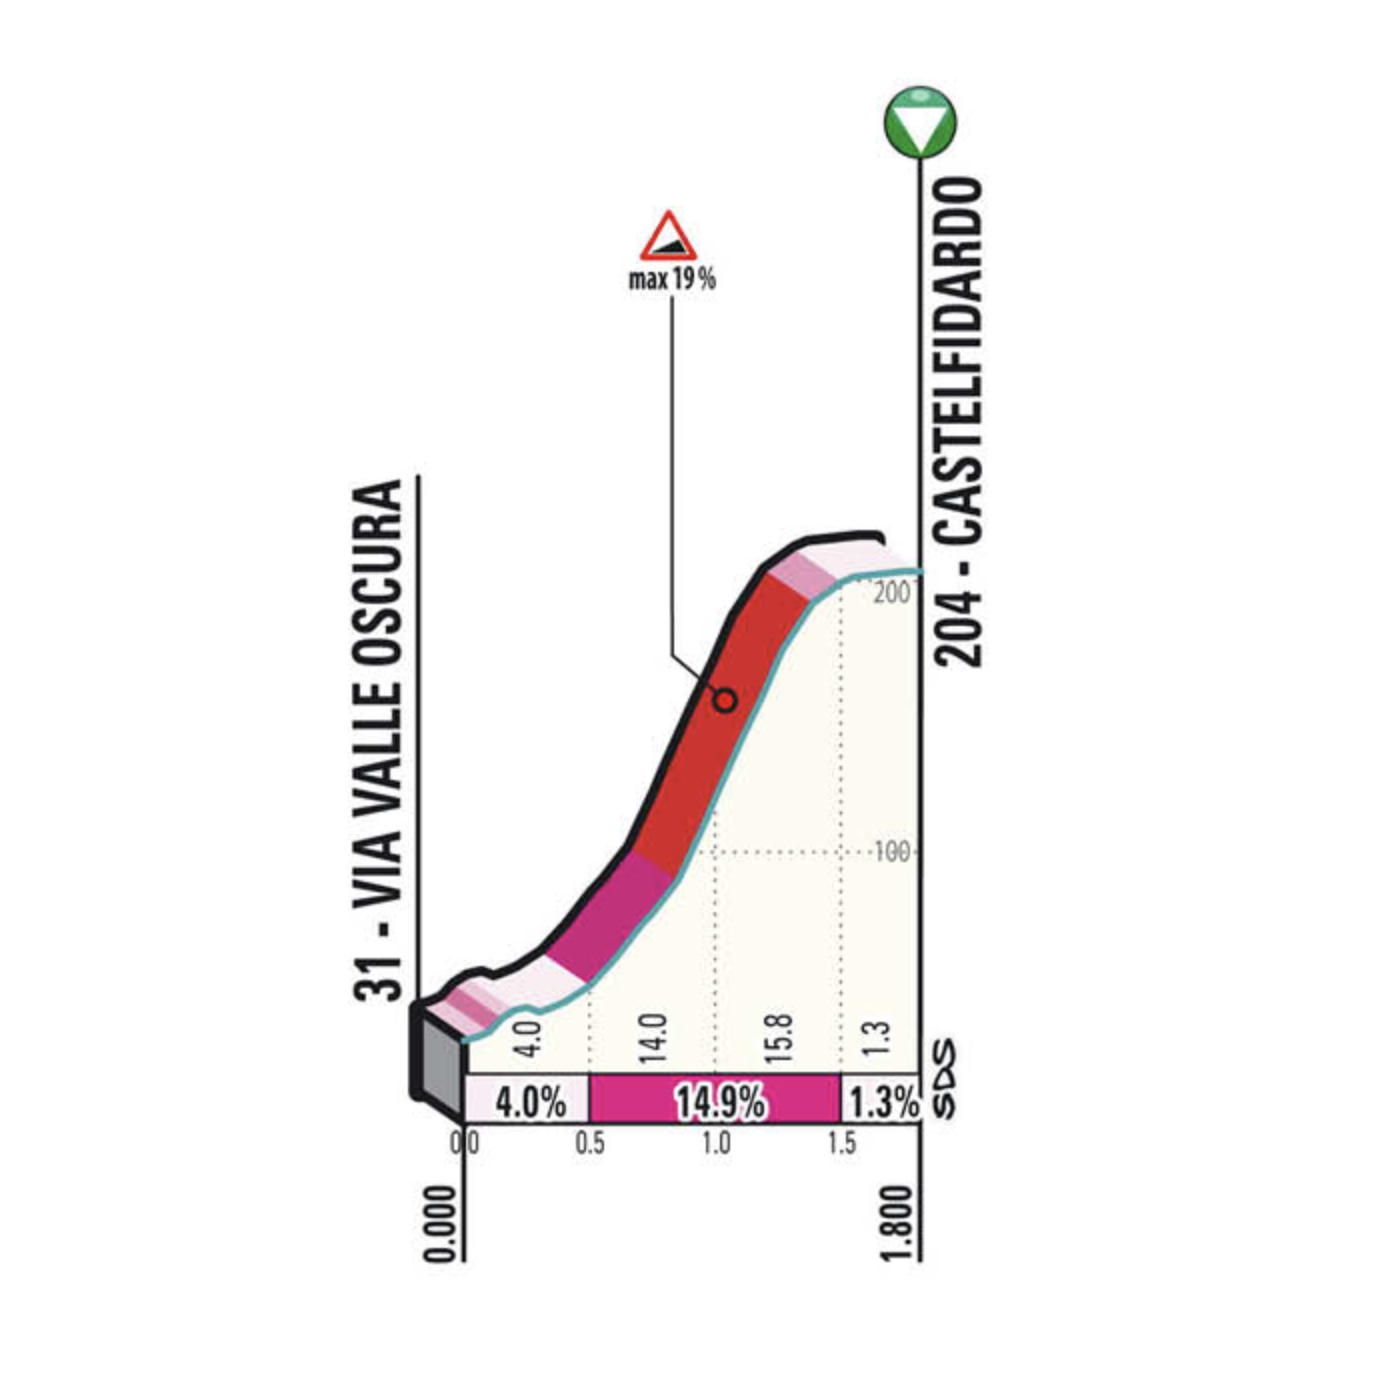 Tirreno 2021 stage 5 climb profile